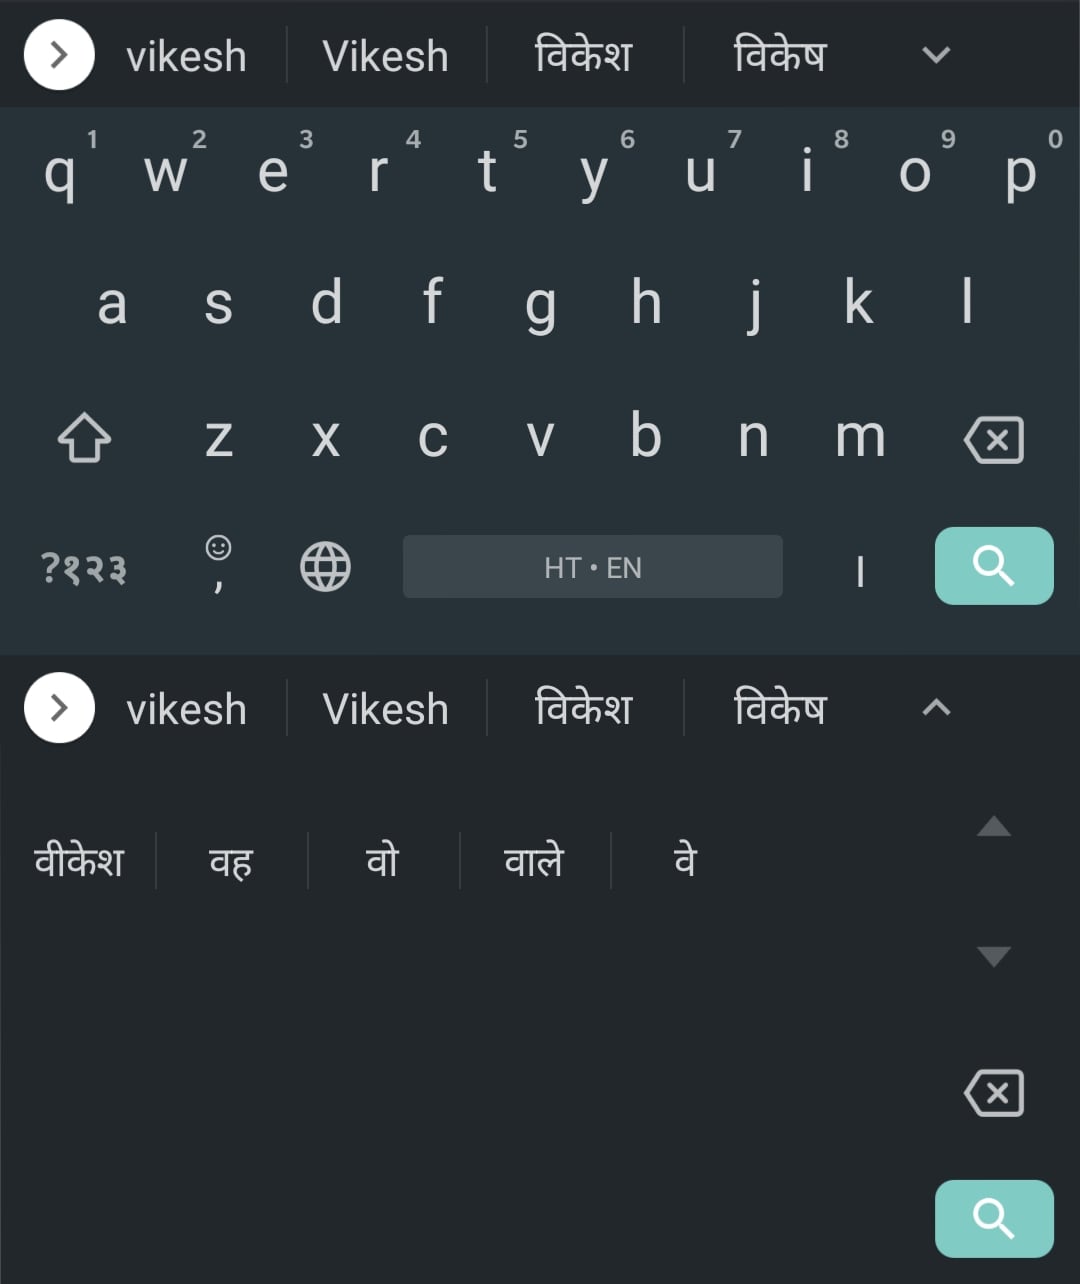 Bilingual suggestions for Hindi